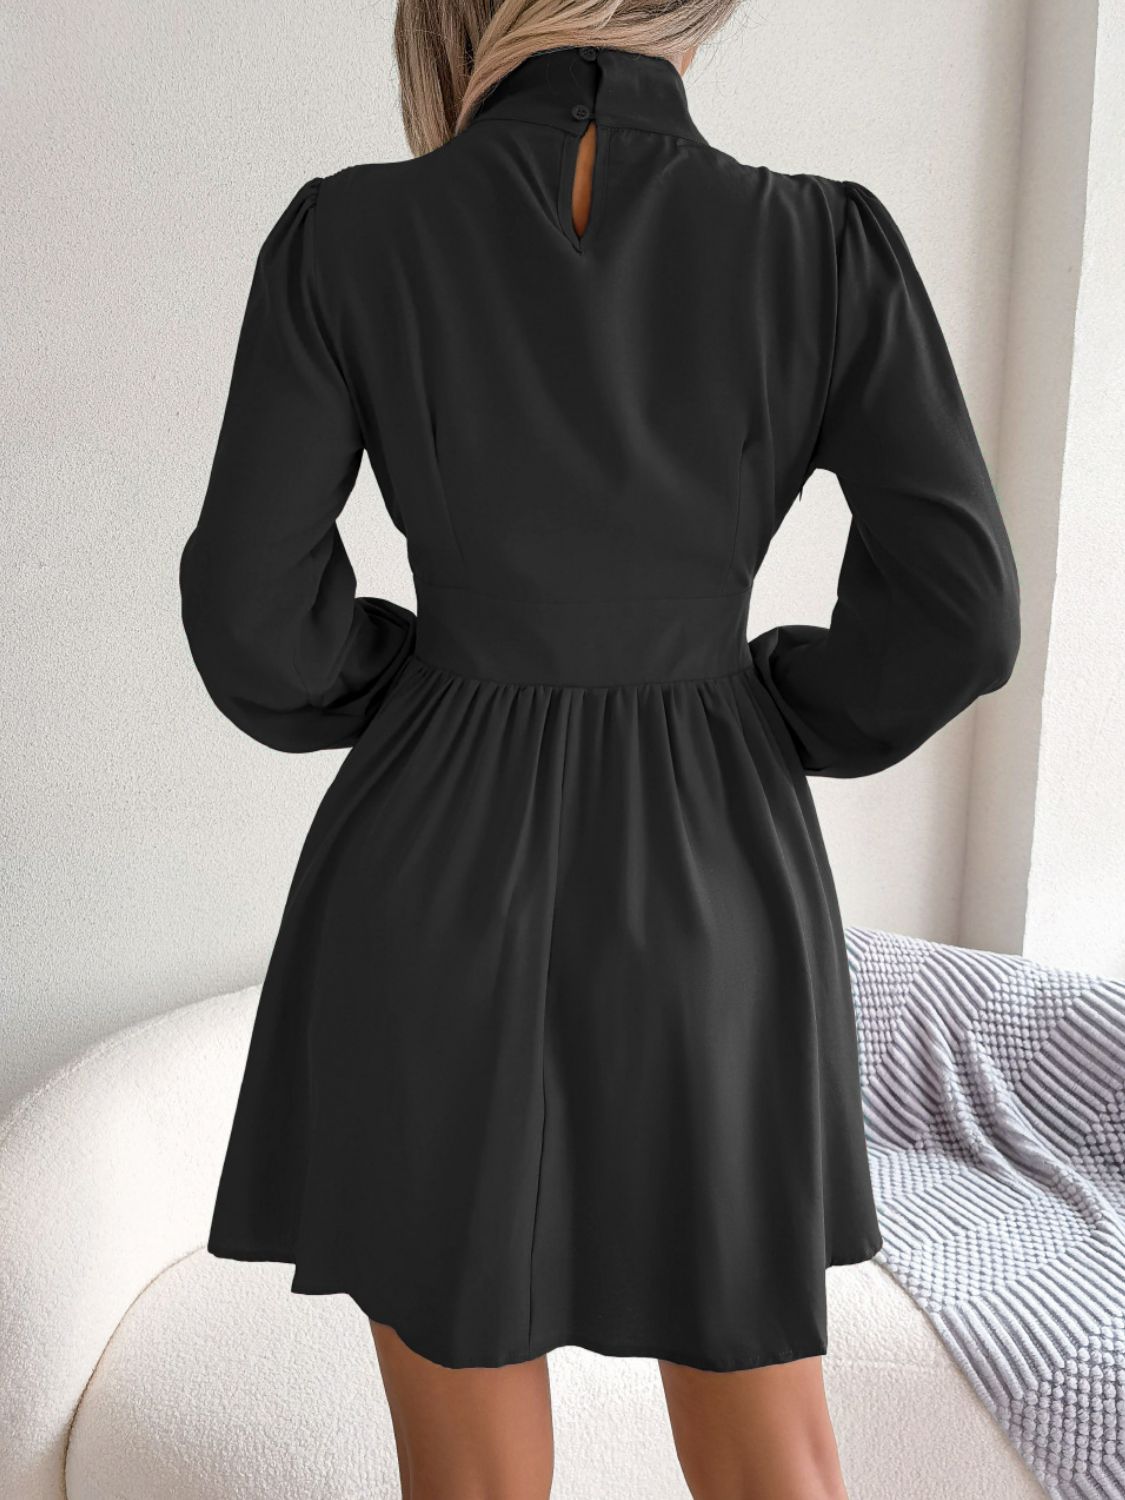 Chic Cutout Turtleneck Mini Dress - A-Line, Long Sleeve, Keyhole Neckline - Casual Elegance for Women